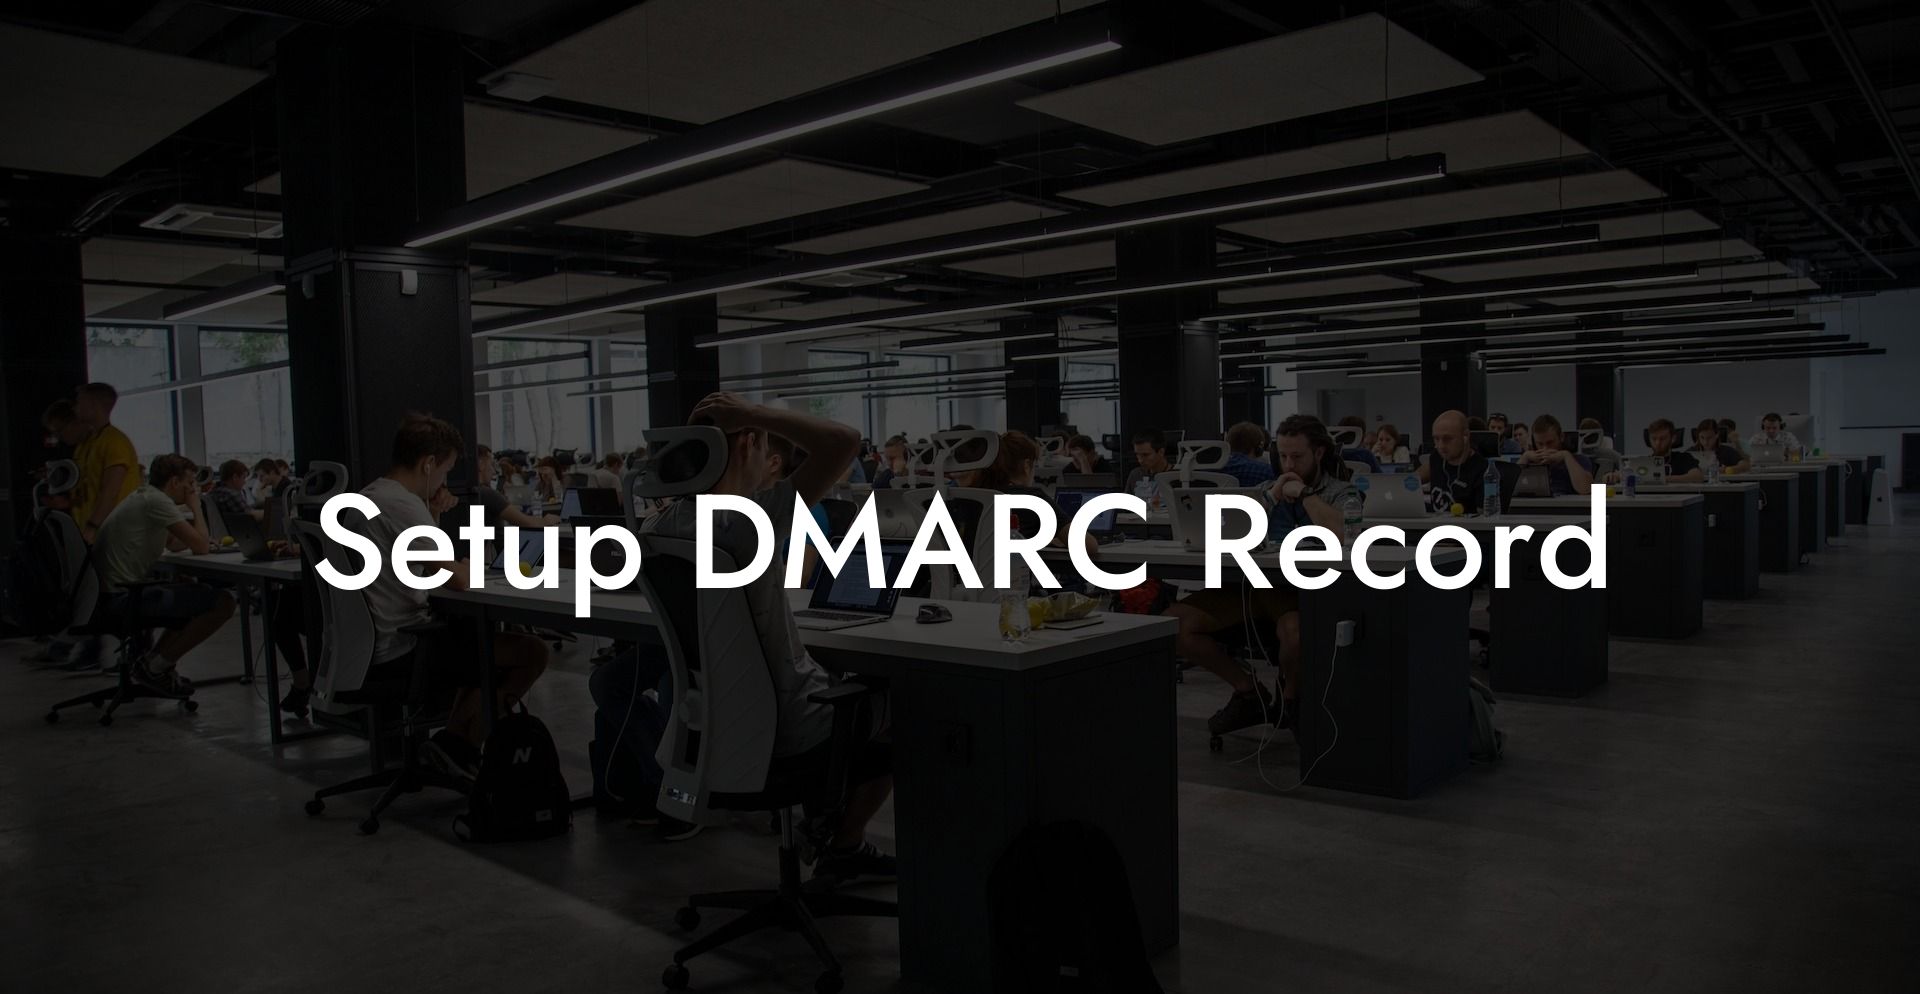 Setup DMARC Record